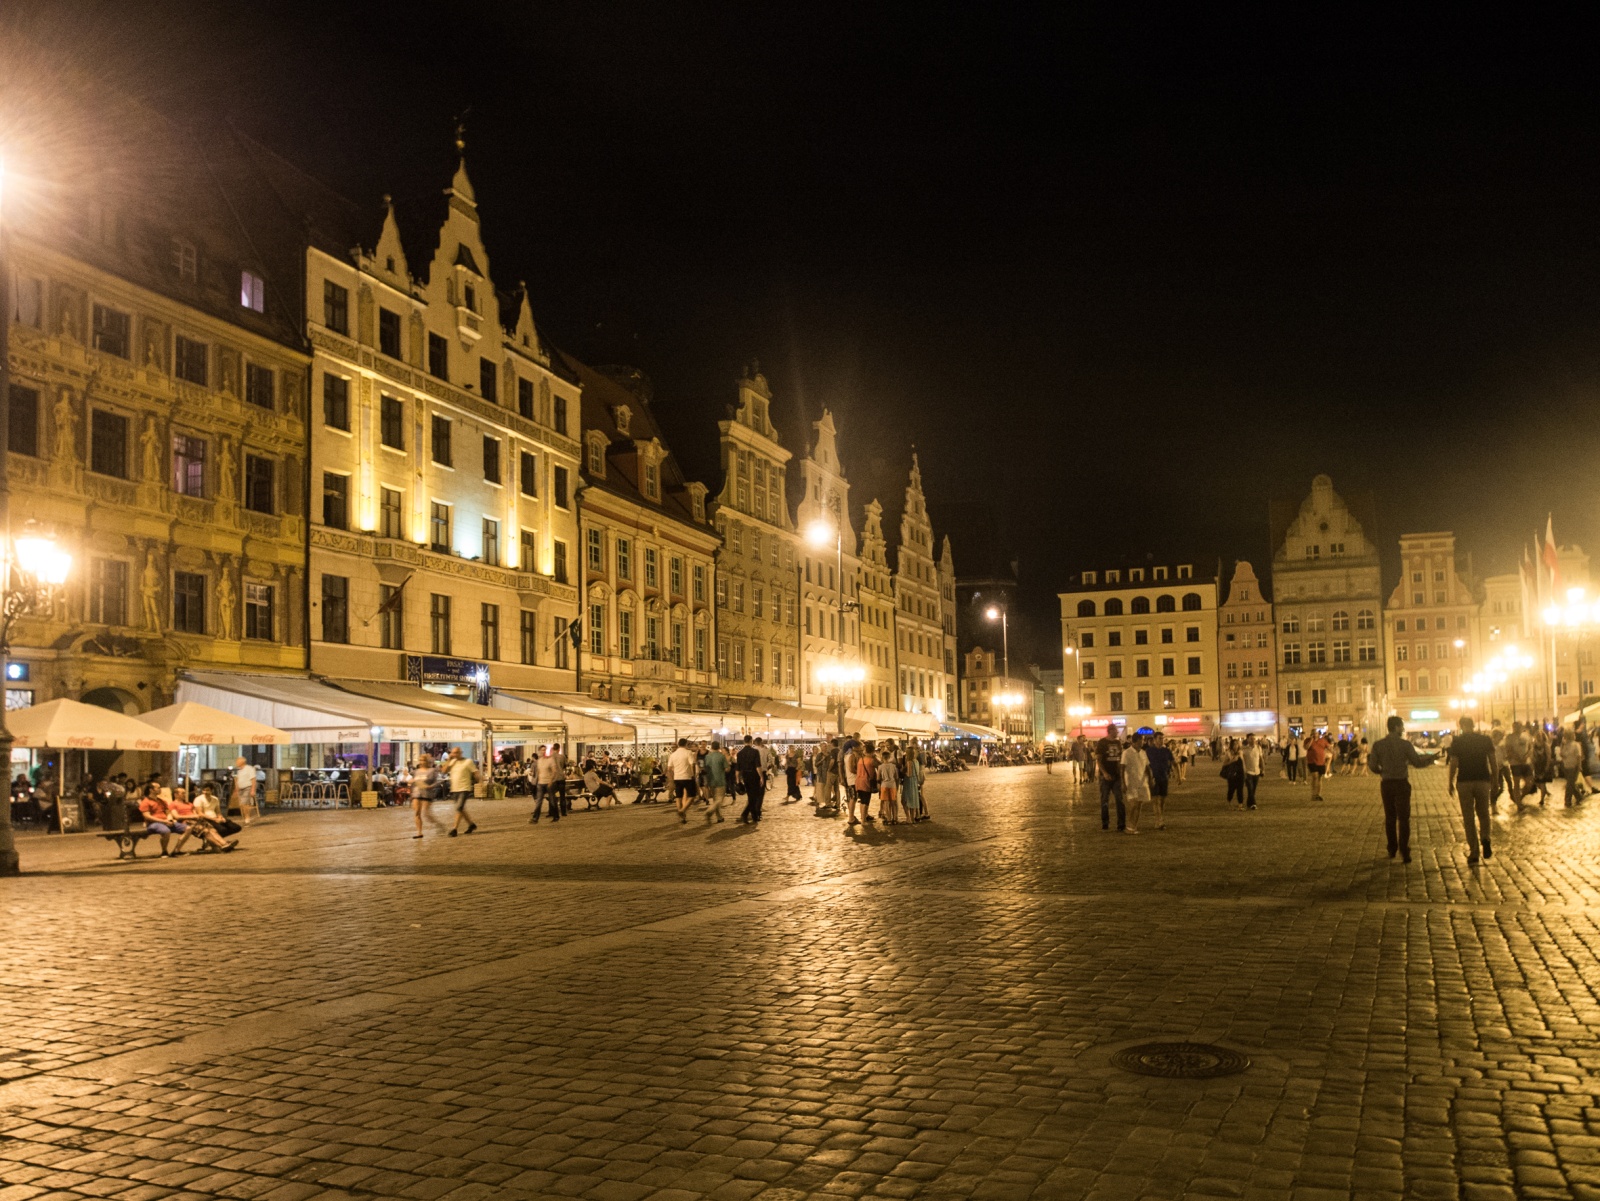 WROCLAW BY NIGHT, POLAND - AUGUST 2015